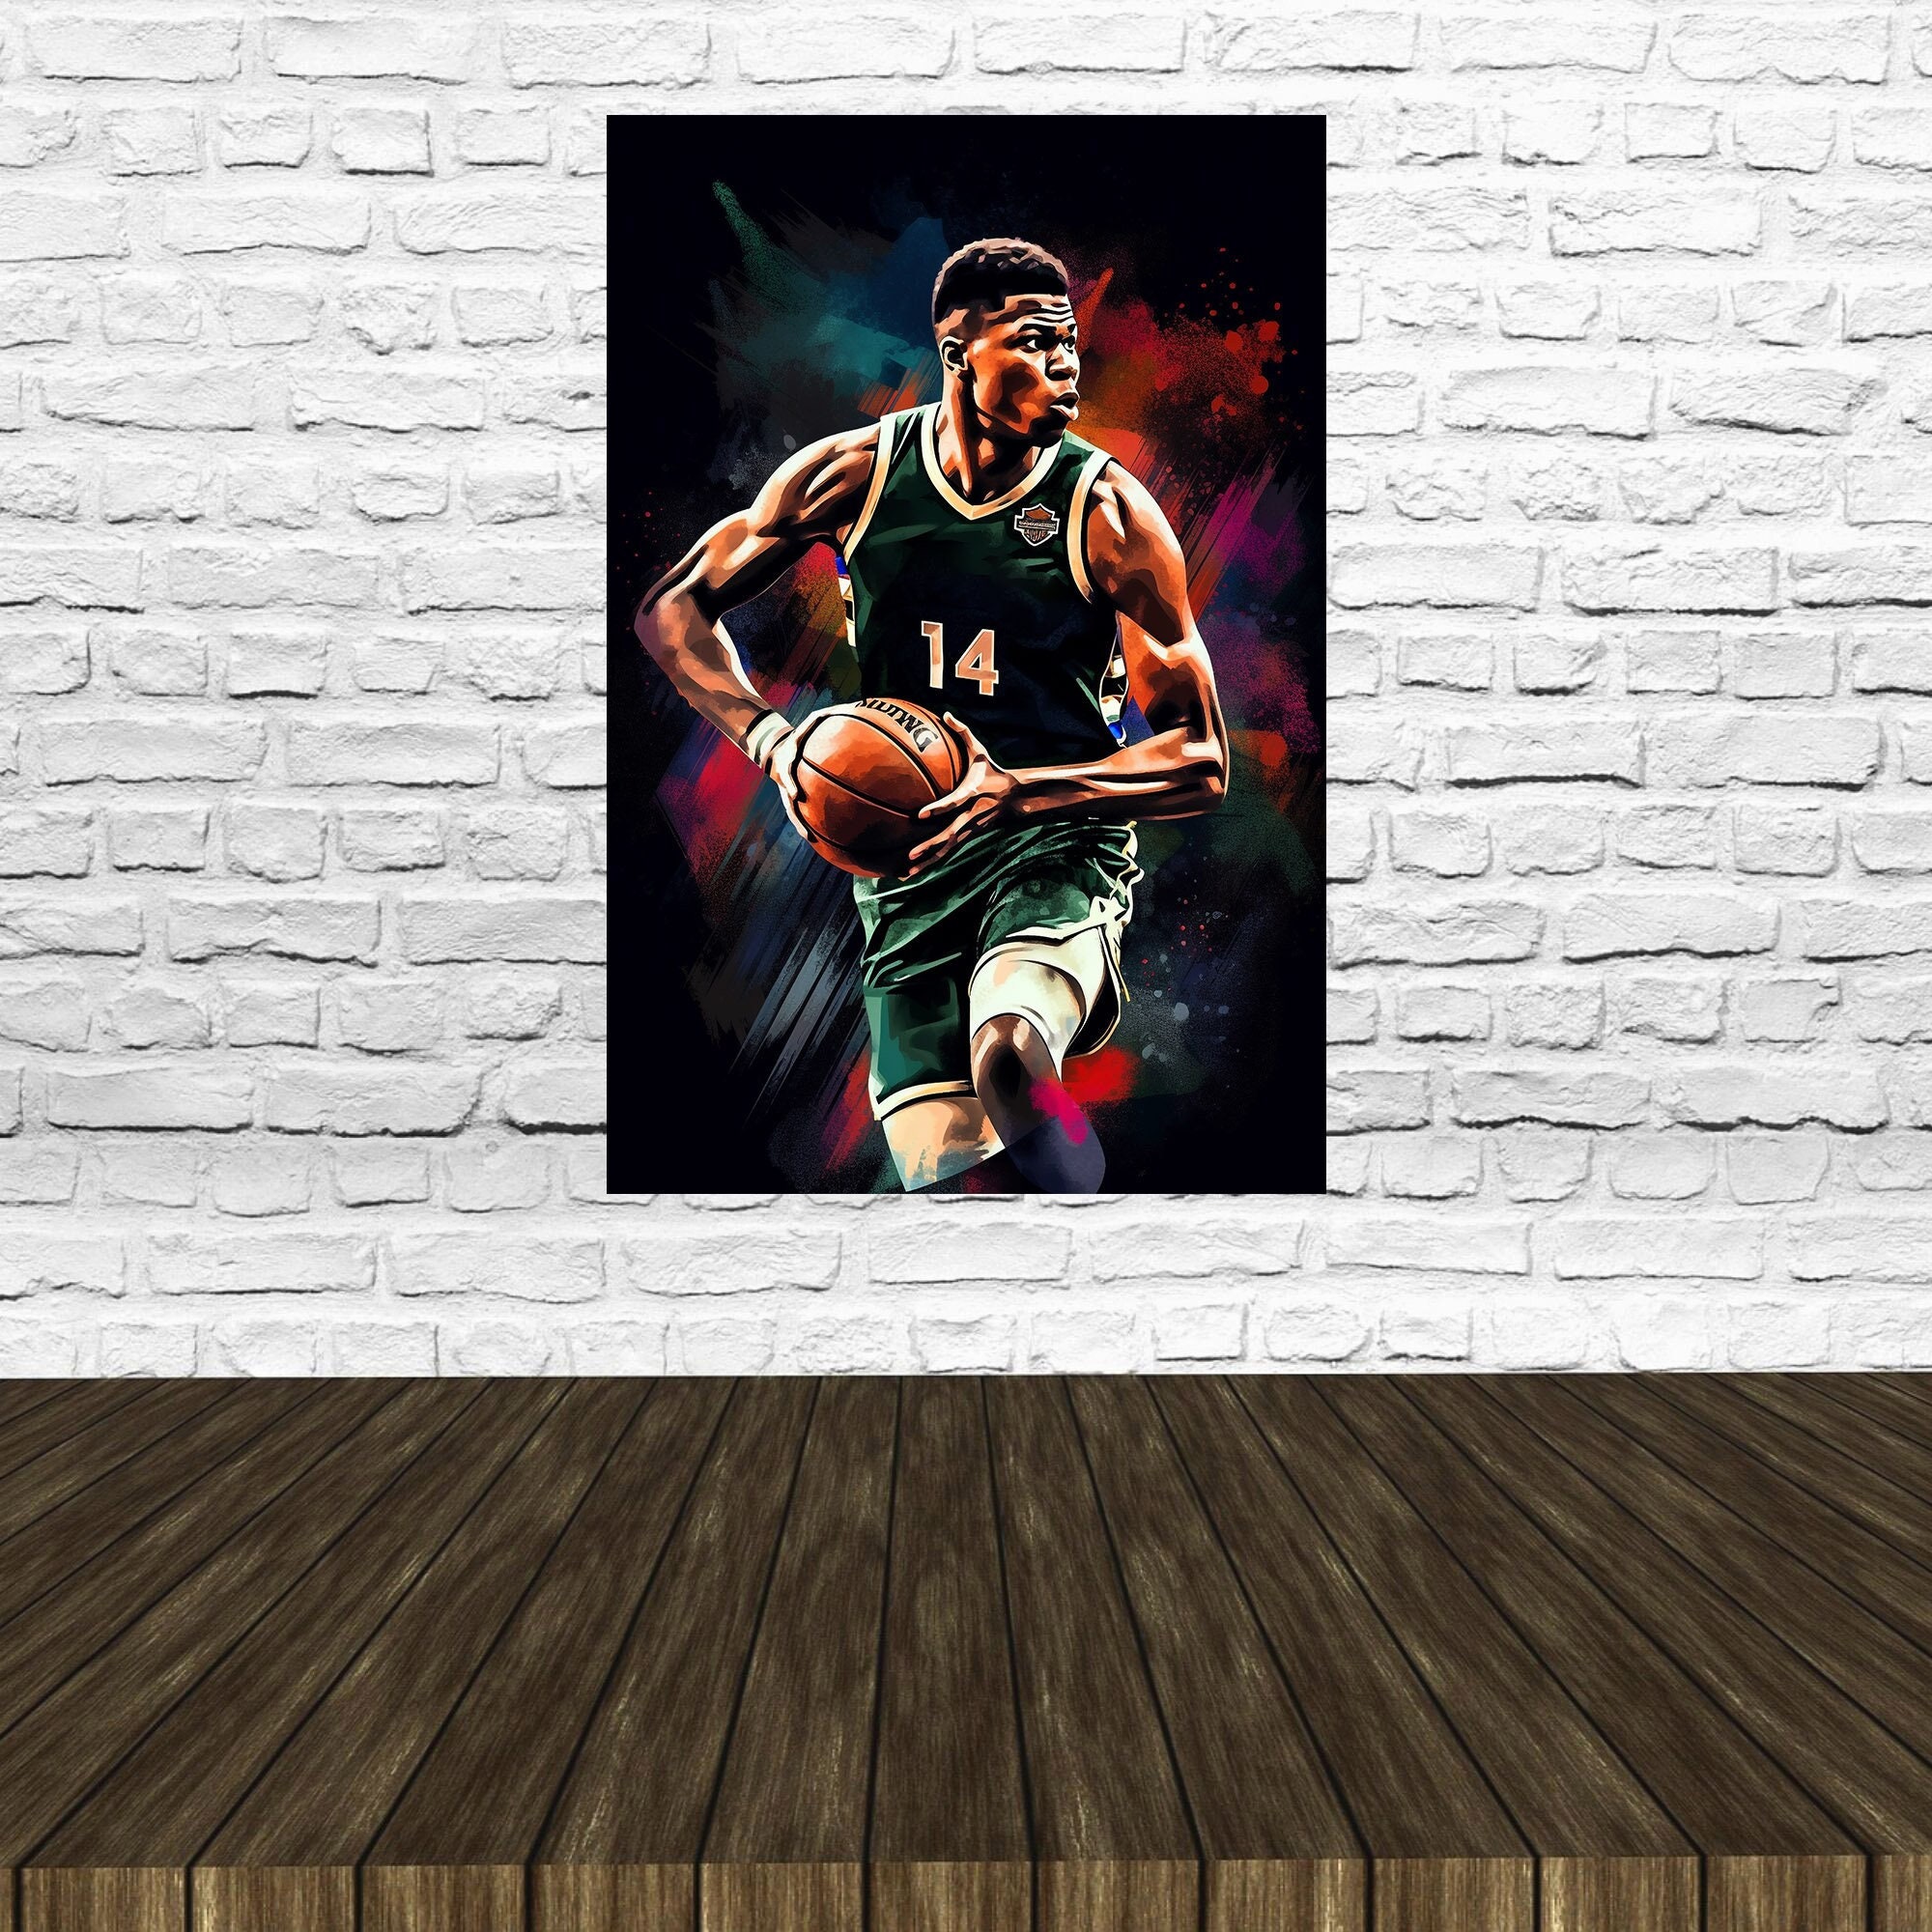 Mingki Giannis Antetokounmpo Poster, ''Greek Freak'' - Basketball Star Canvas Poster for Man Cave Office Home Decor, Basketball Wall Art Basketball